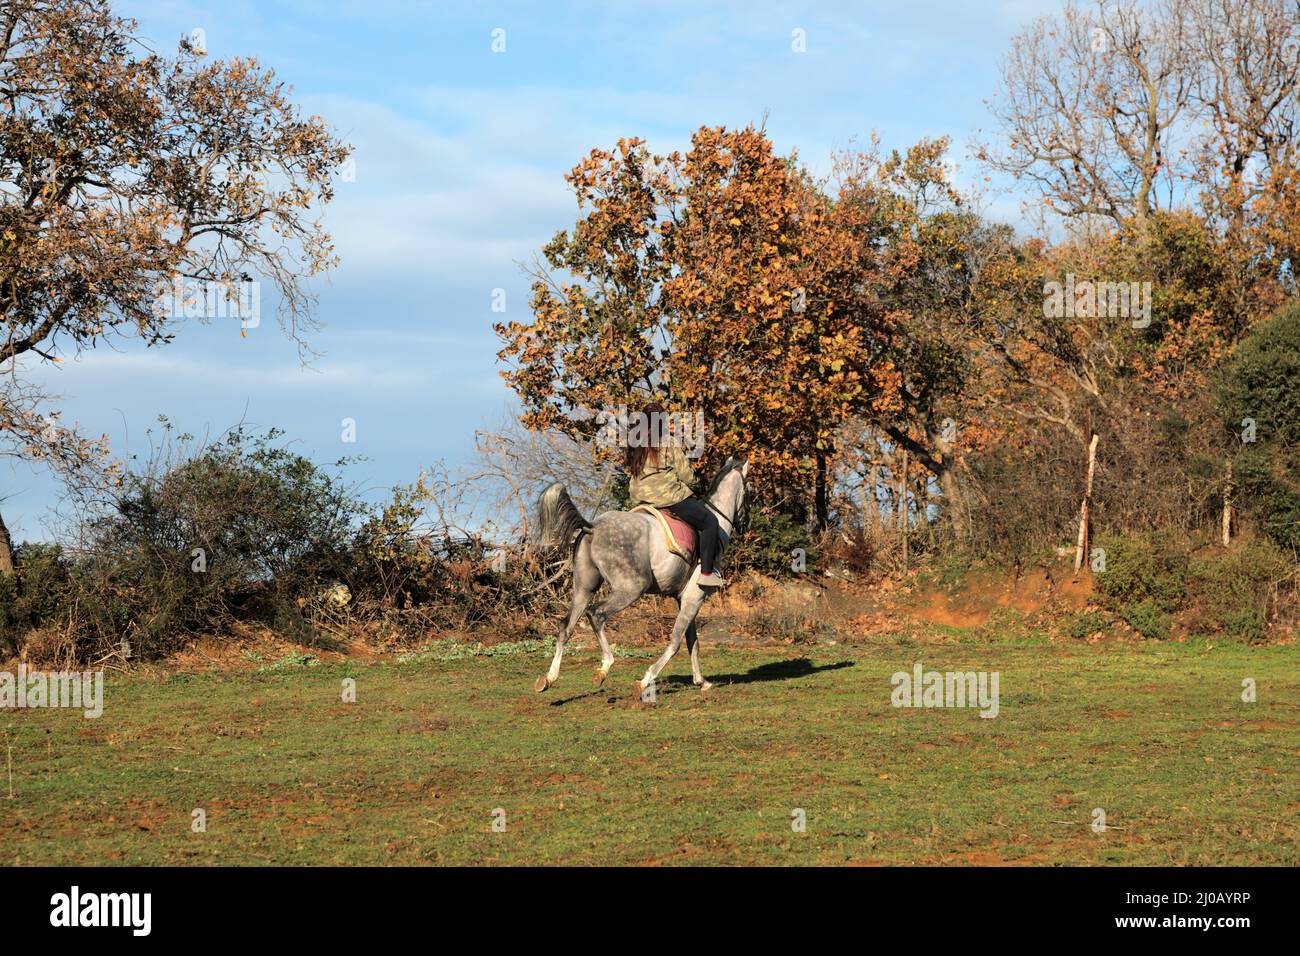 A white horse running through a woodland. Race horse. Stock Photo